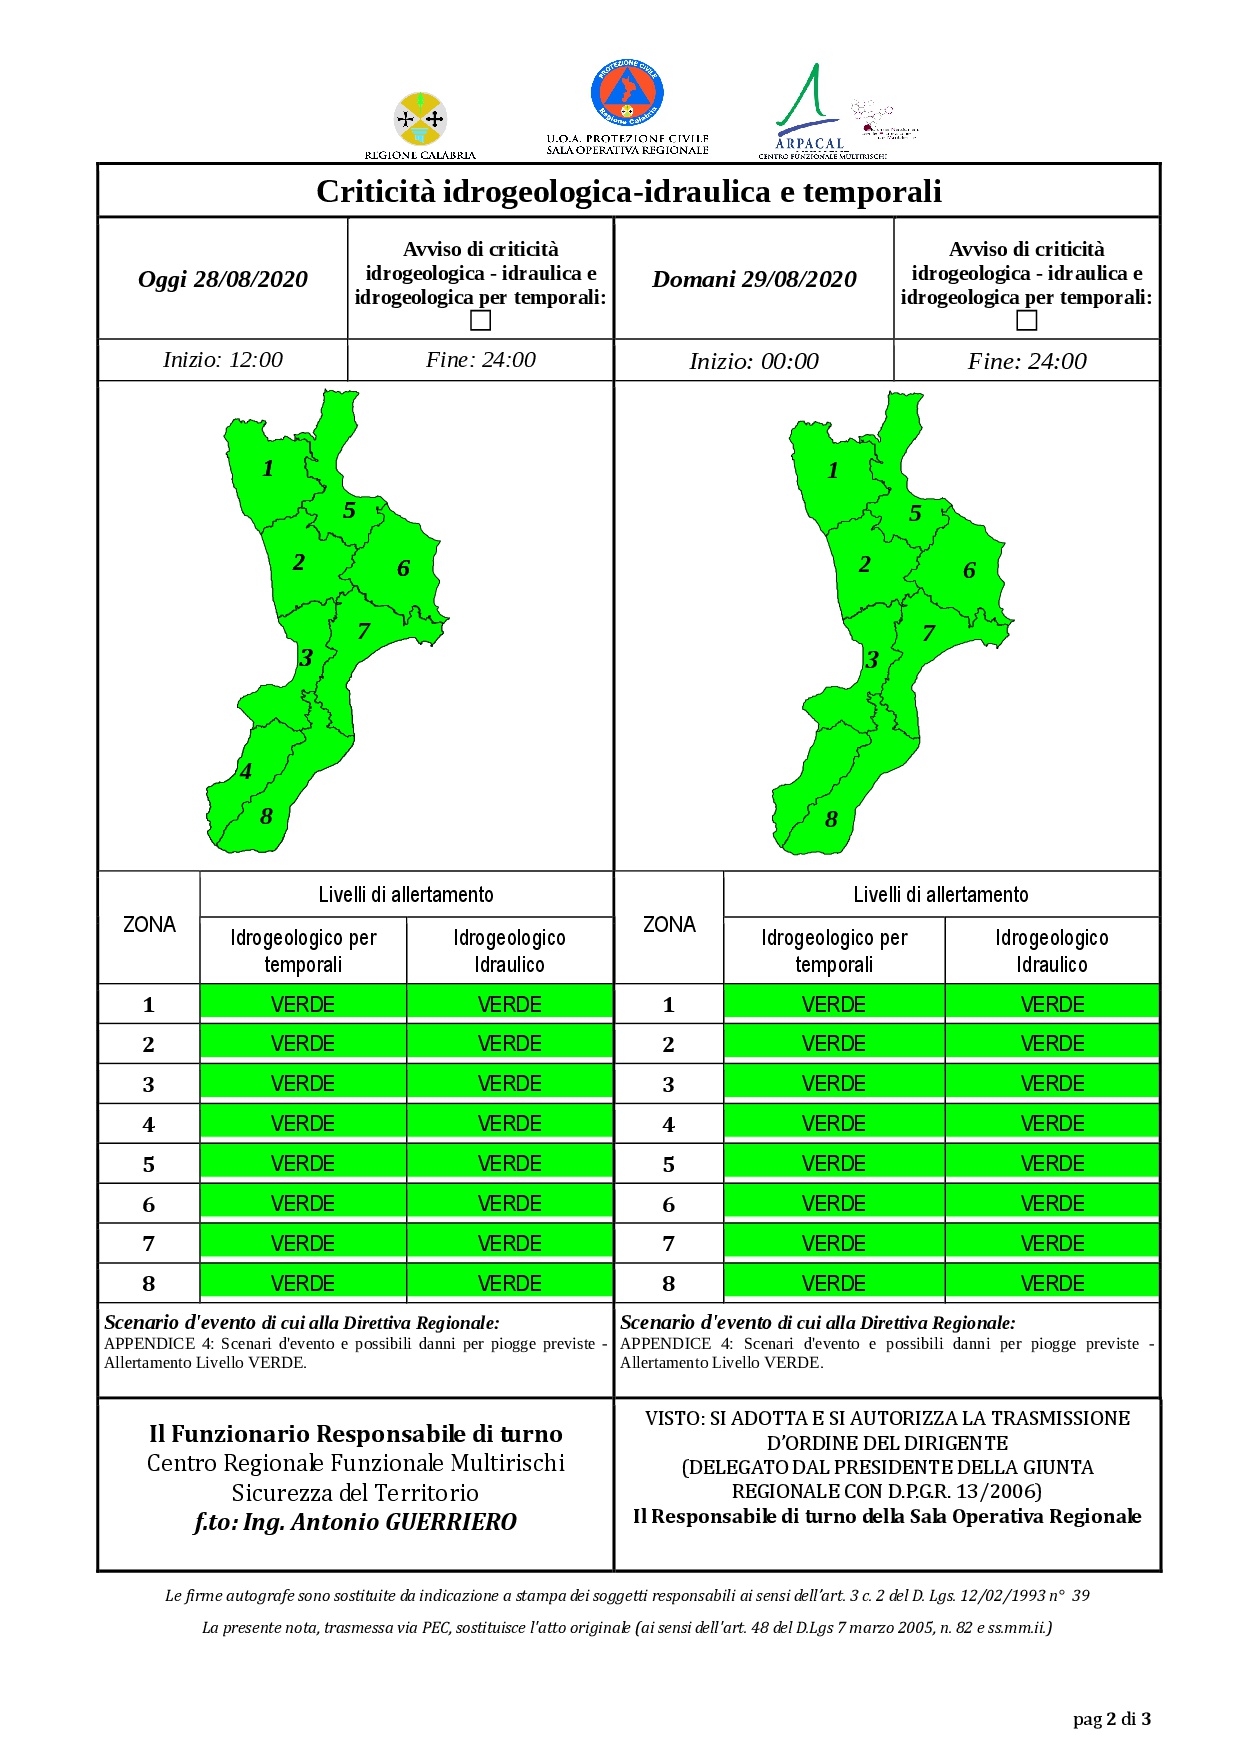 Criticità idrogeologica-idraulica e temporali in Calabria 28-08-2020